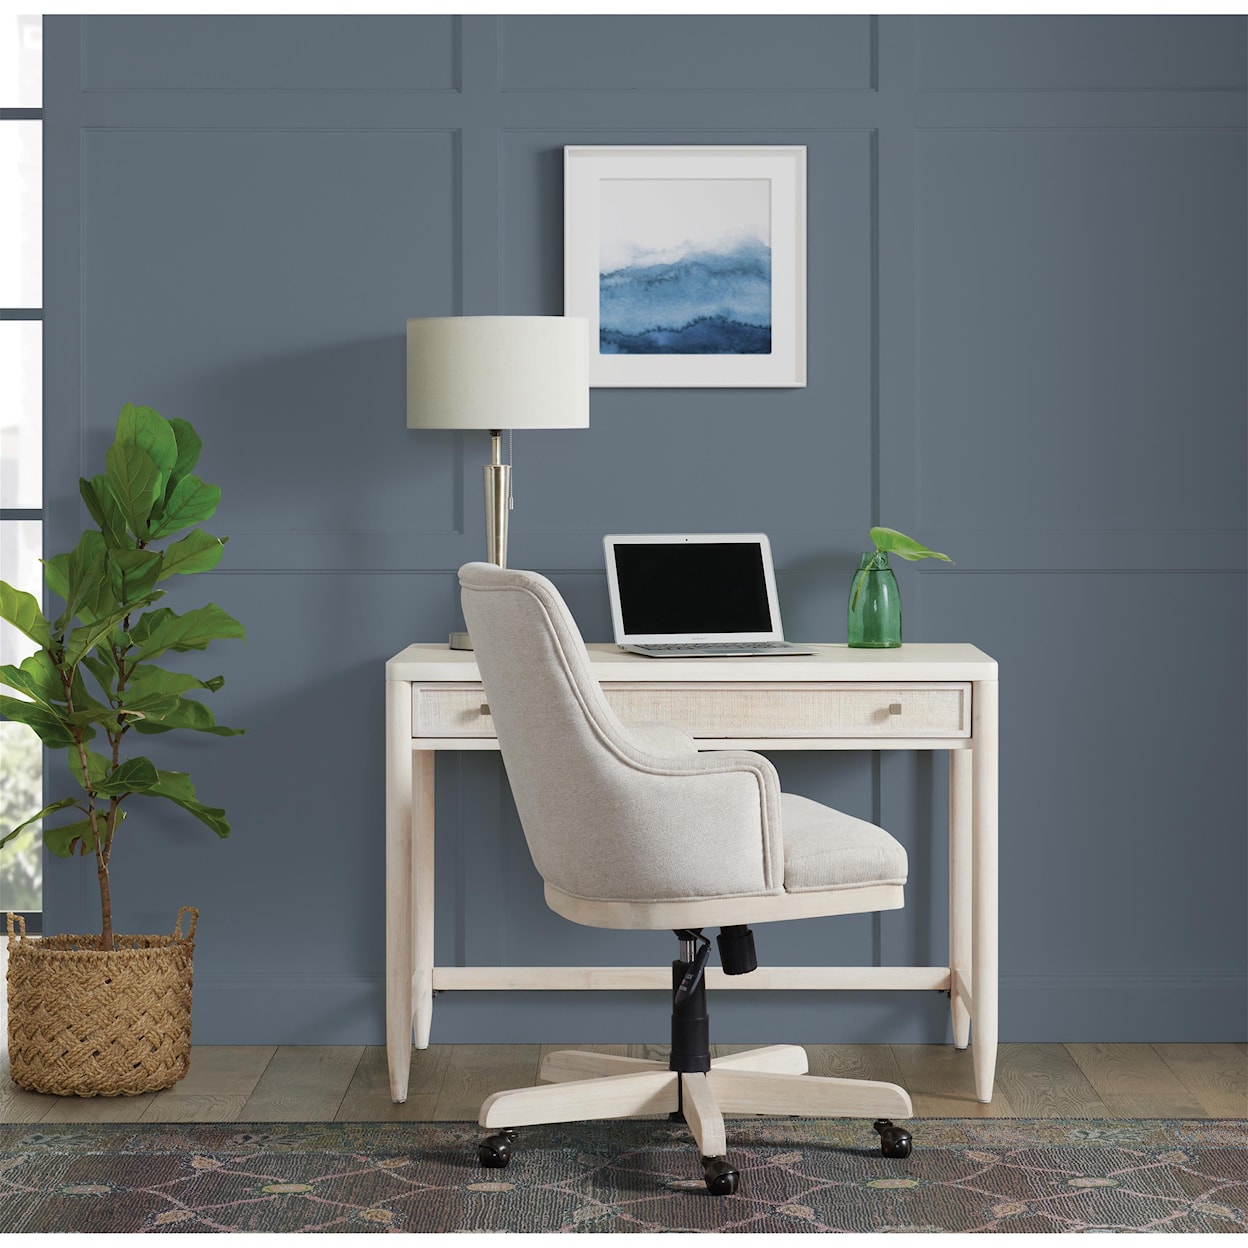 Riverside Furniture Maren Upholstered Desk Chair